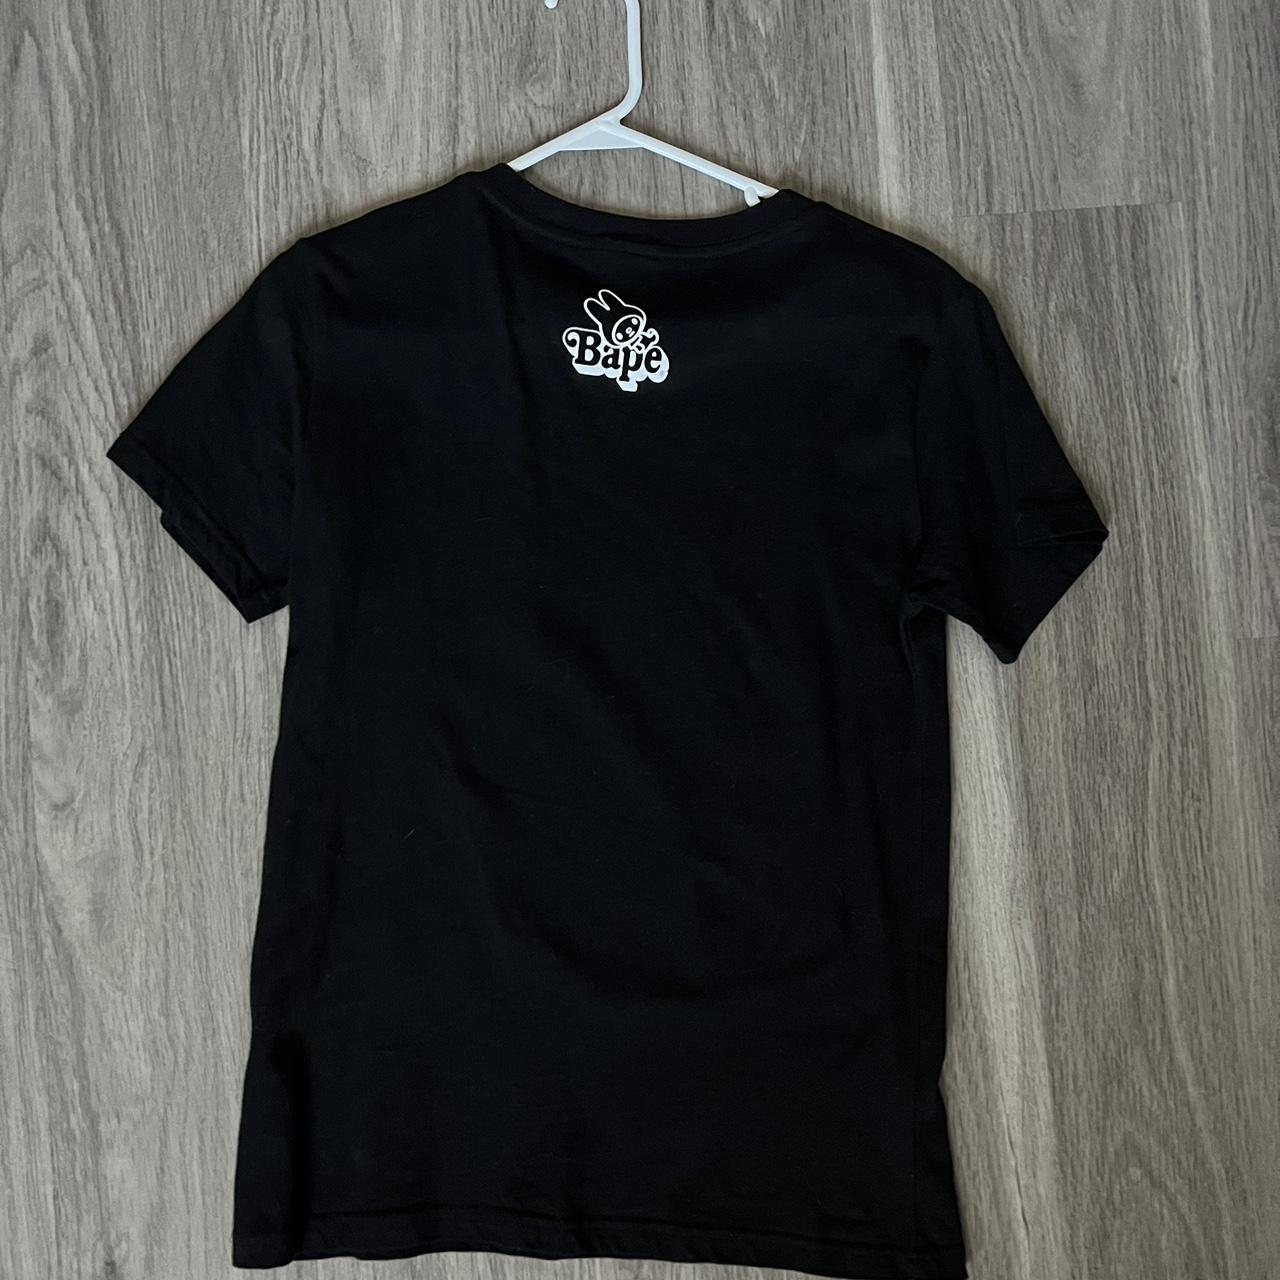 BAPE Men's Black T-shirt | Depop